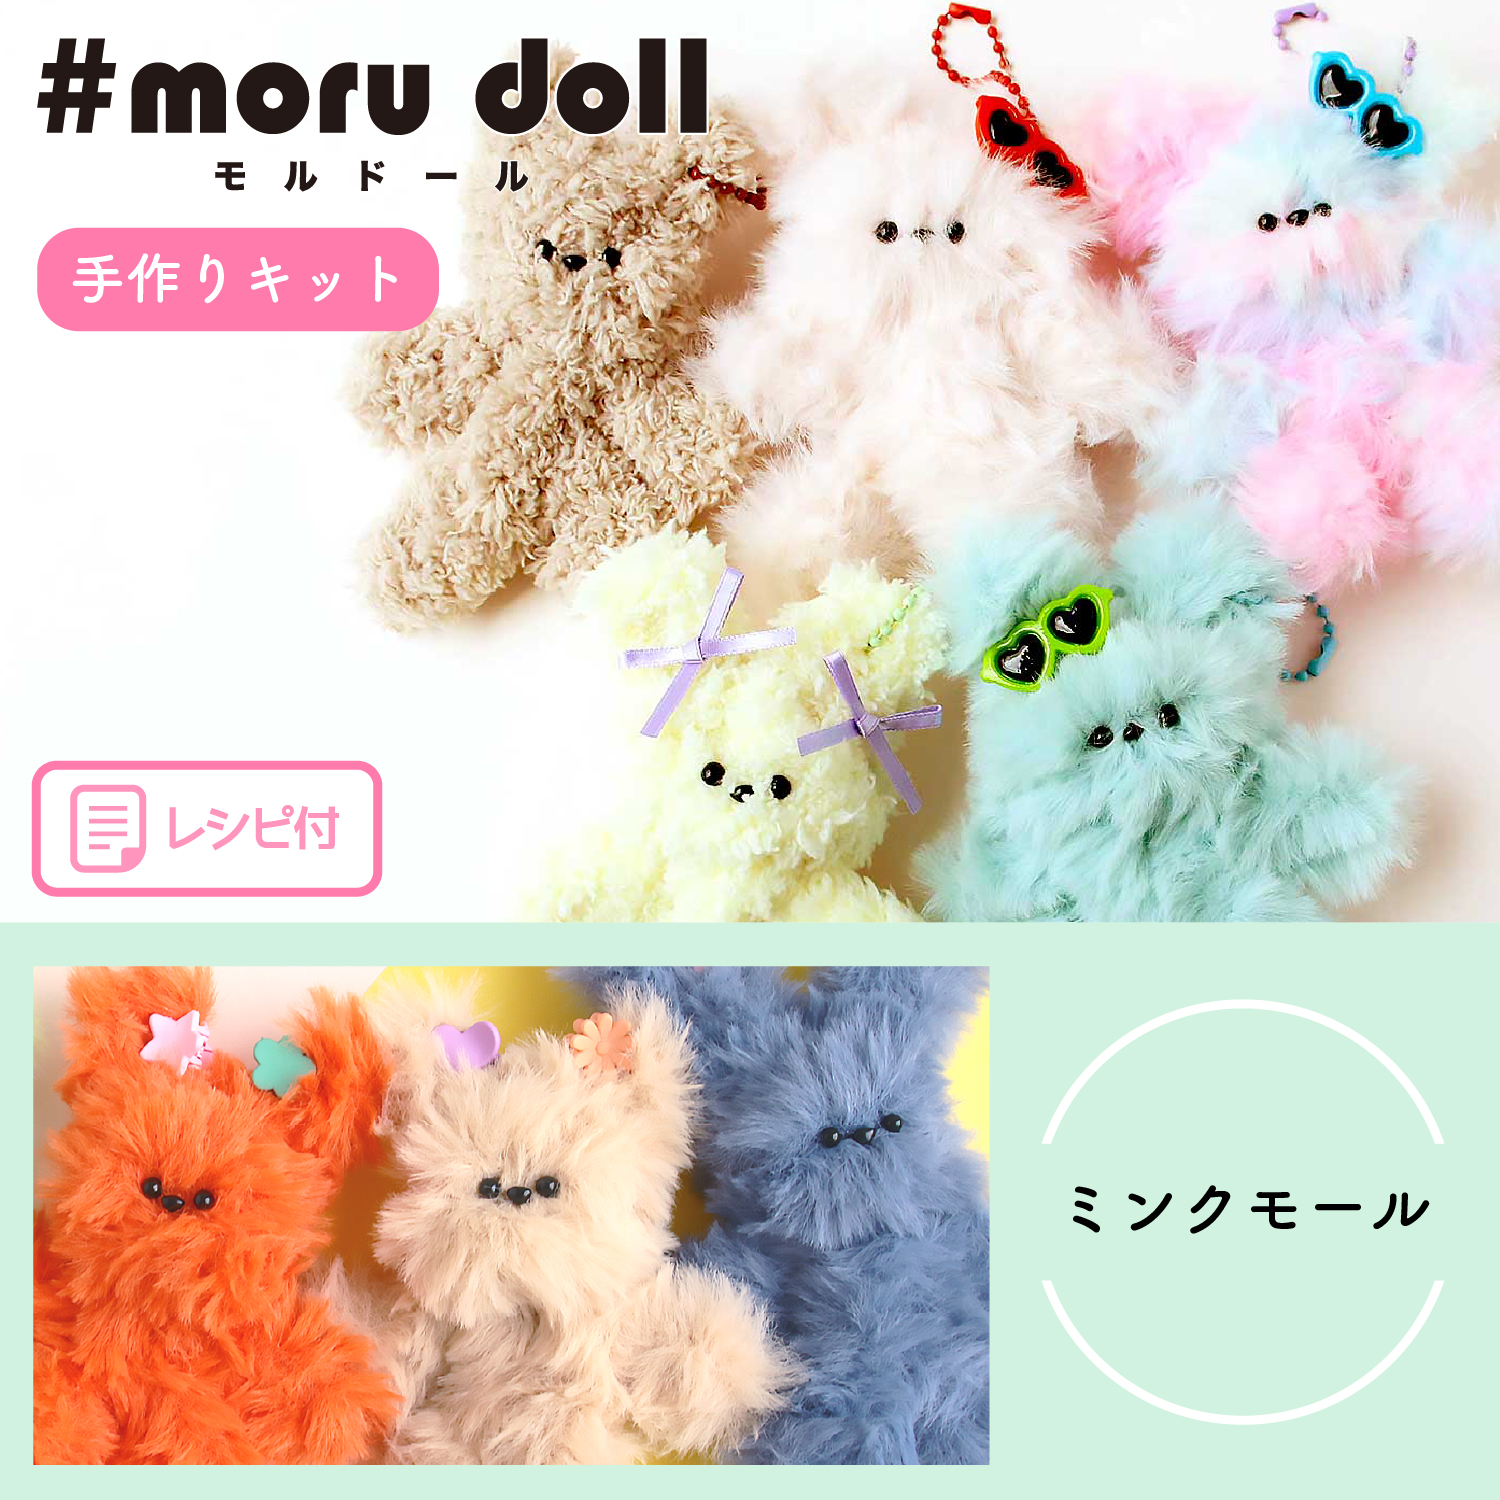 MOL-KIT Moll doll Korean miscellaneous goods Moldoll kit, mink mall (bag)